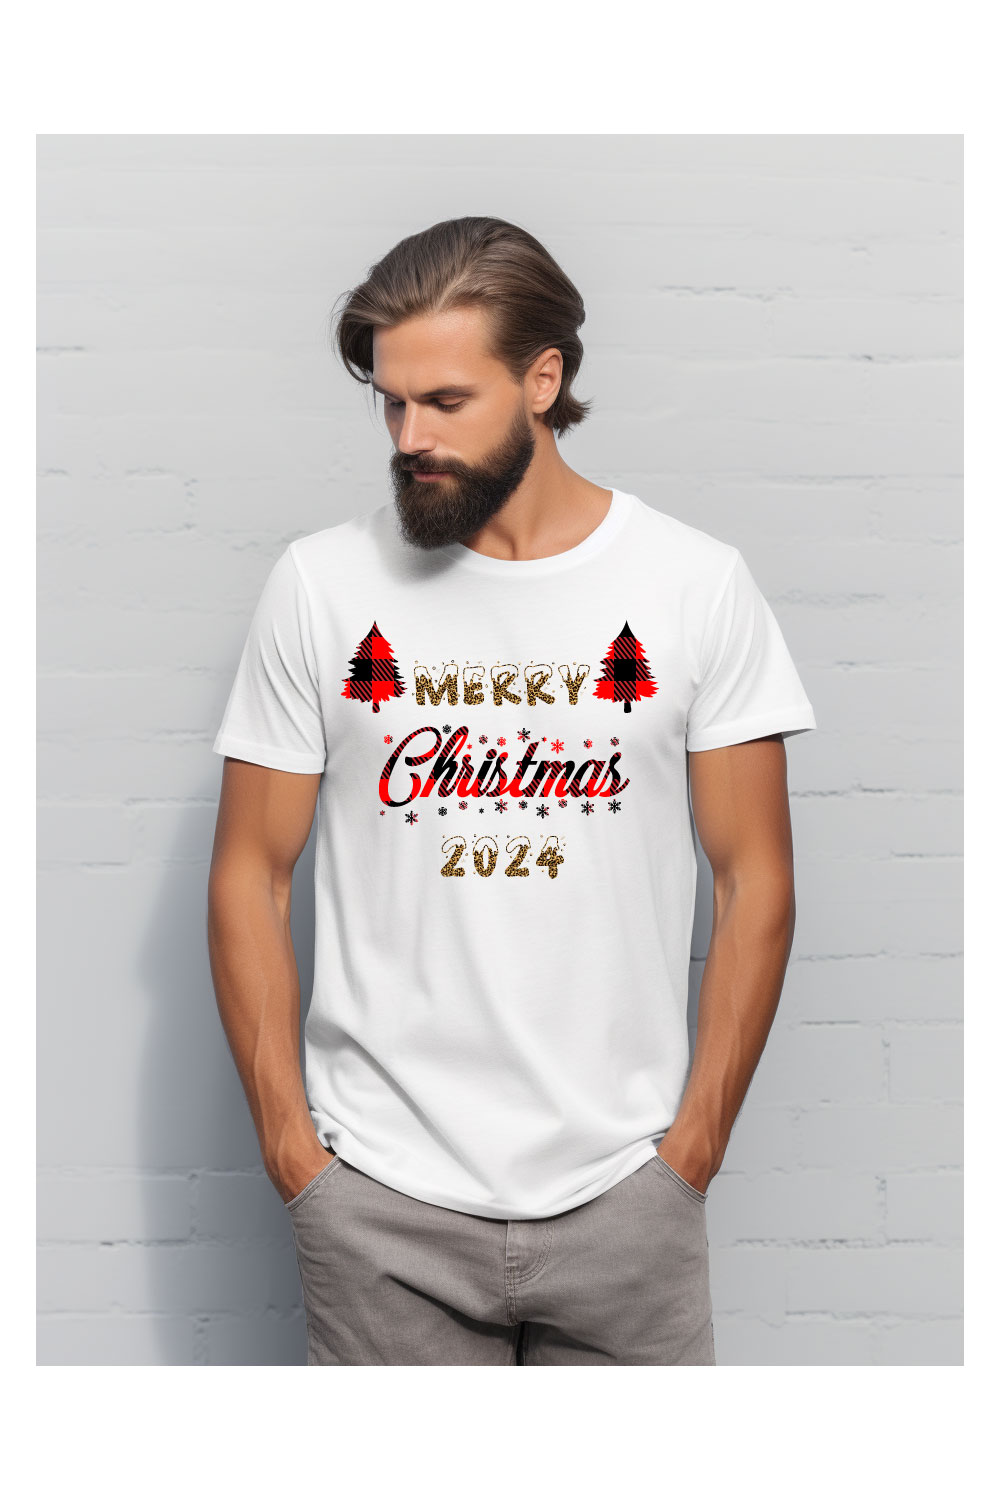 Christmas T-Shirt Design pinterest preview image.